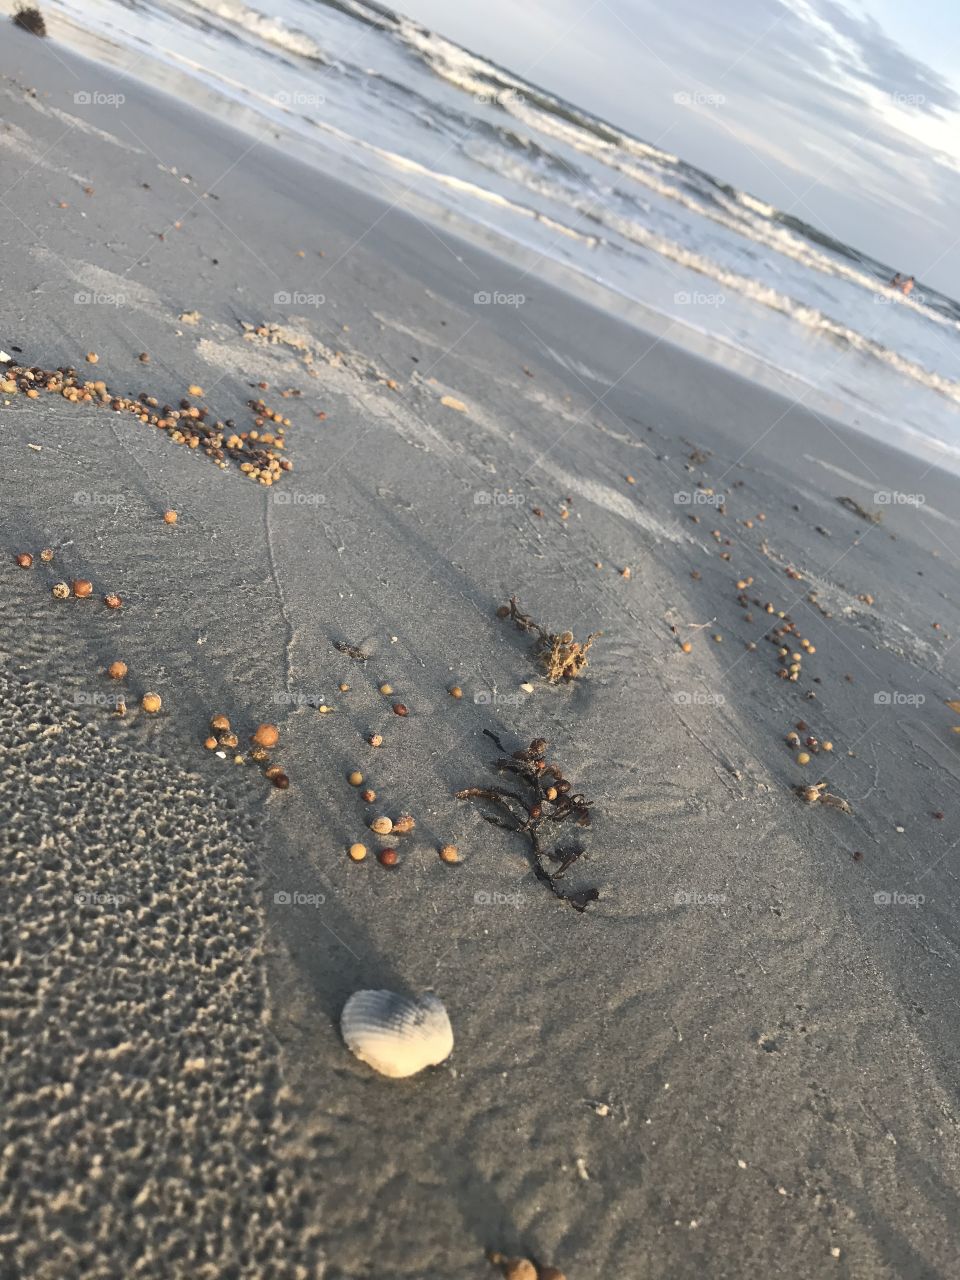 Seashell at the Gulf
Galveston, TX